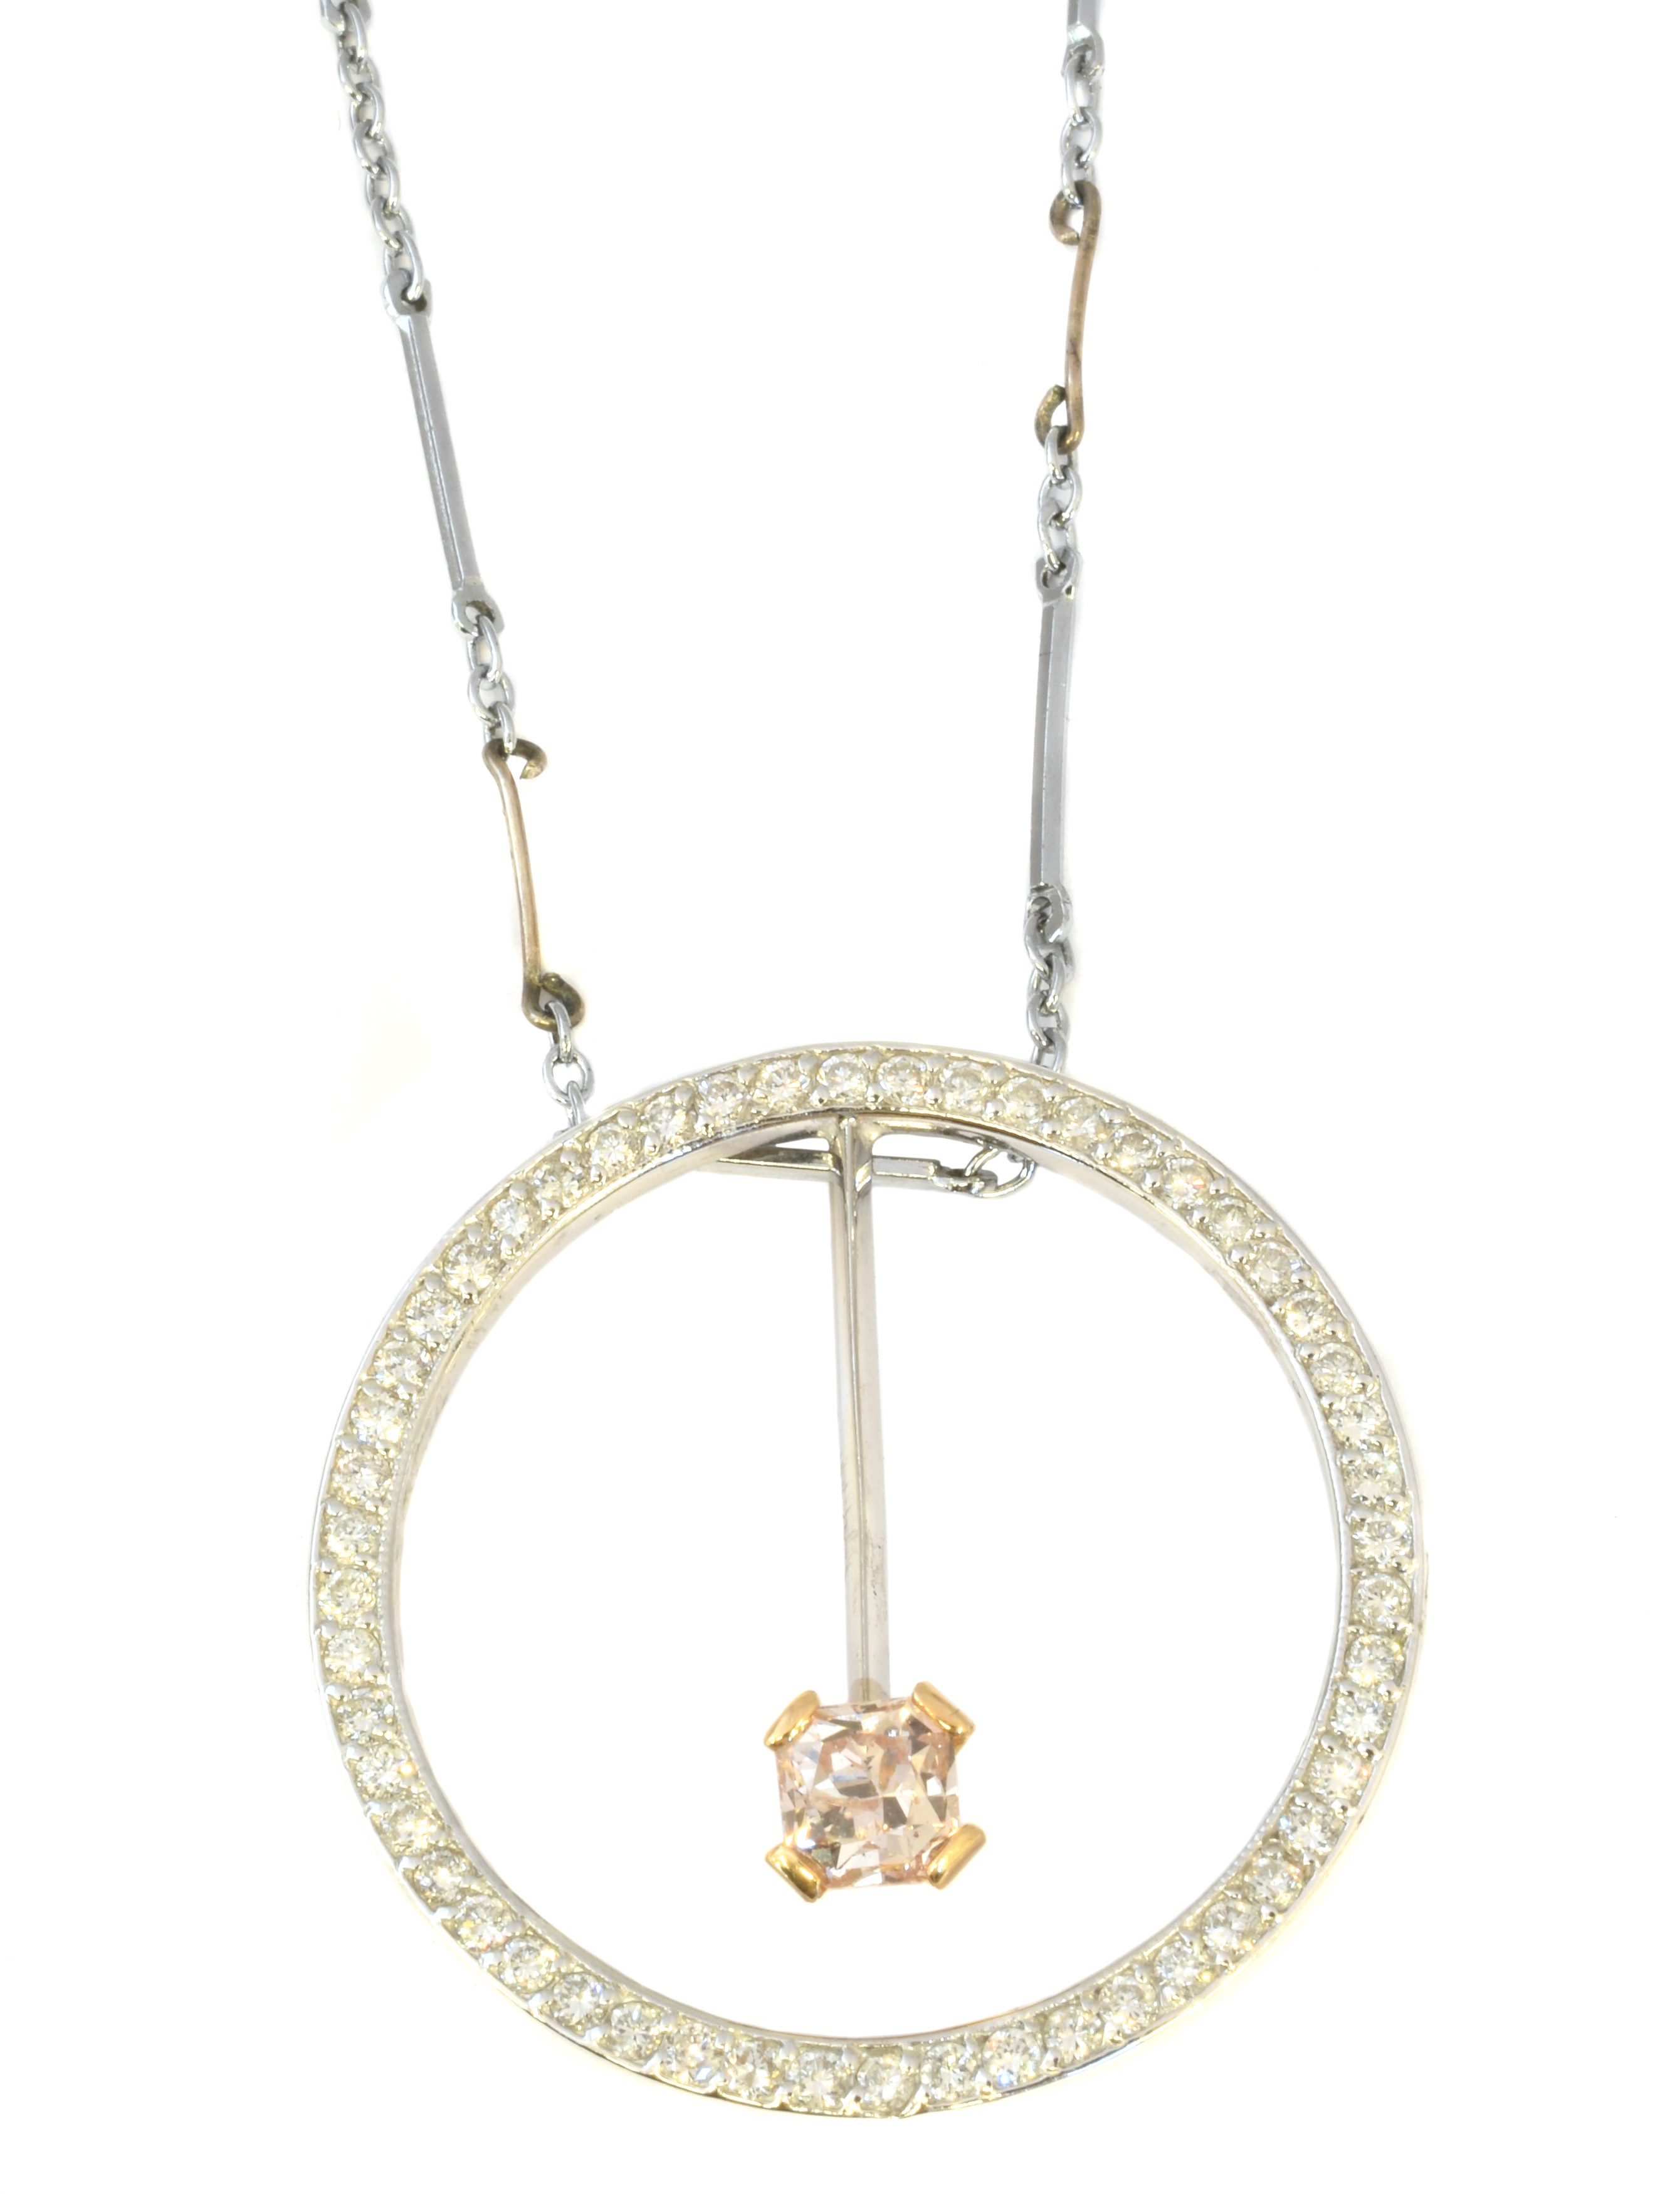 A diamond necklace, - Image 2 of 3